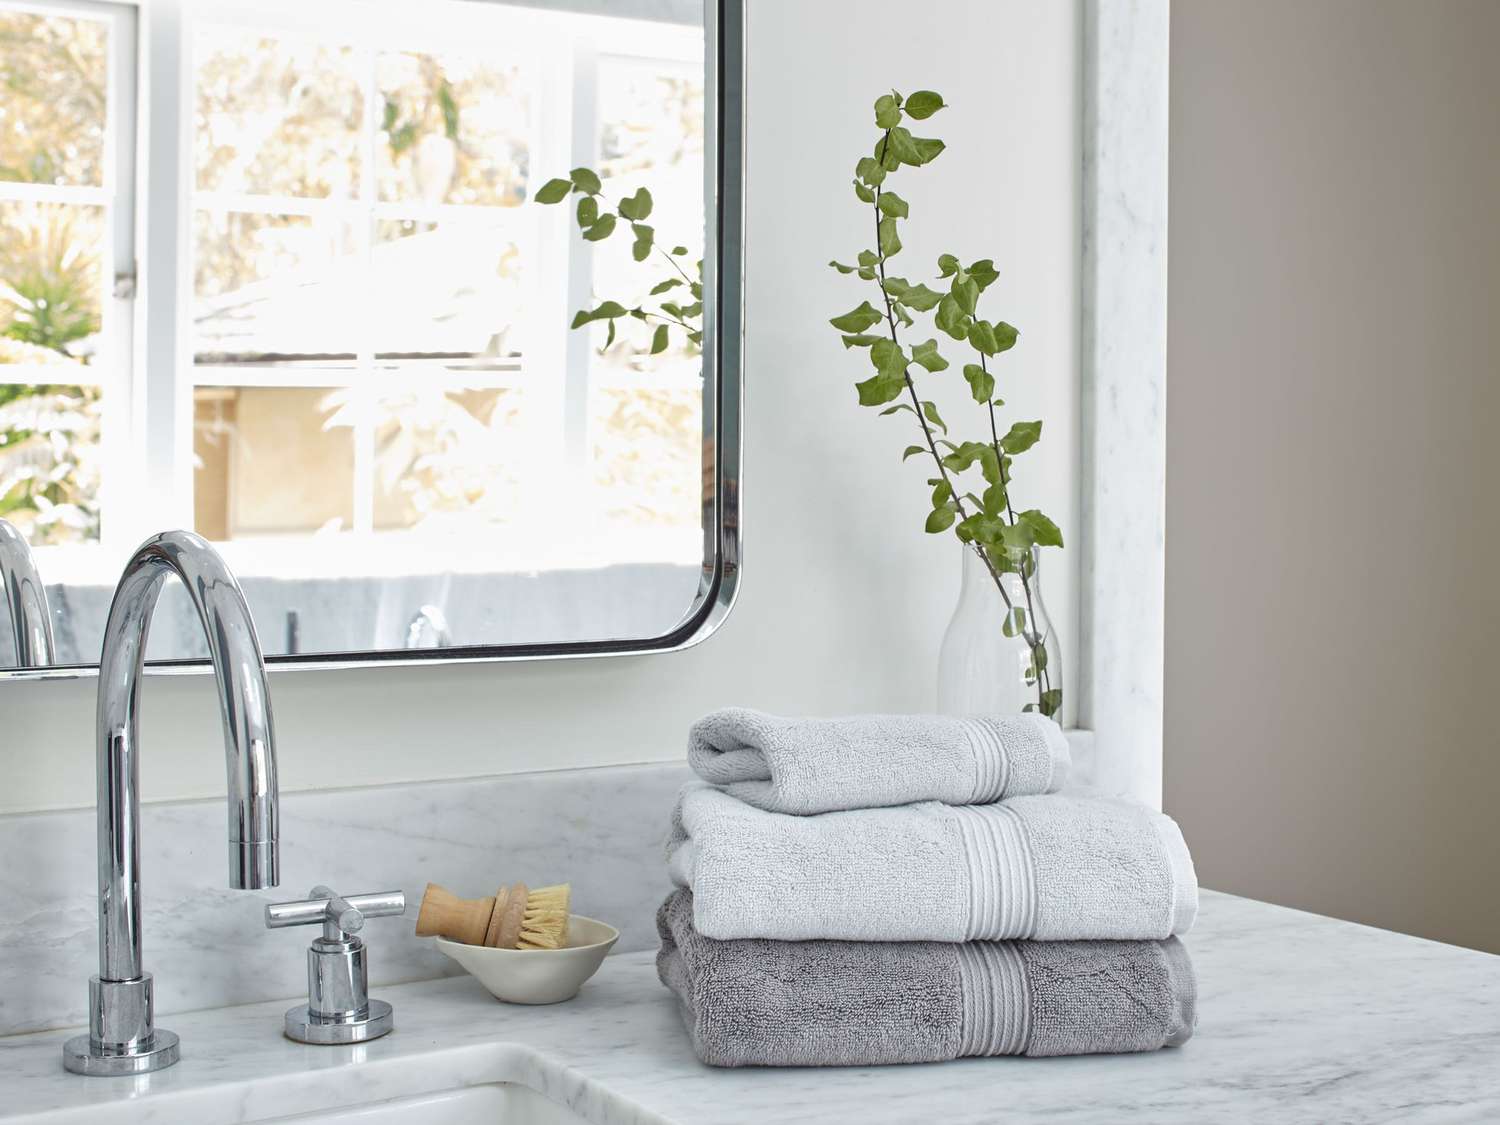 100% Cotton Large Hotel Quality Bath Towel Set Soft & Absorbent Violet Towels Pleasant Home Luxury Bath Towels Set 600 GSM Towels for Bathroom 4 Pack – 27” x 54” Bathroom Towels